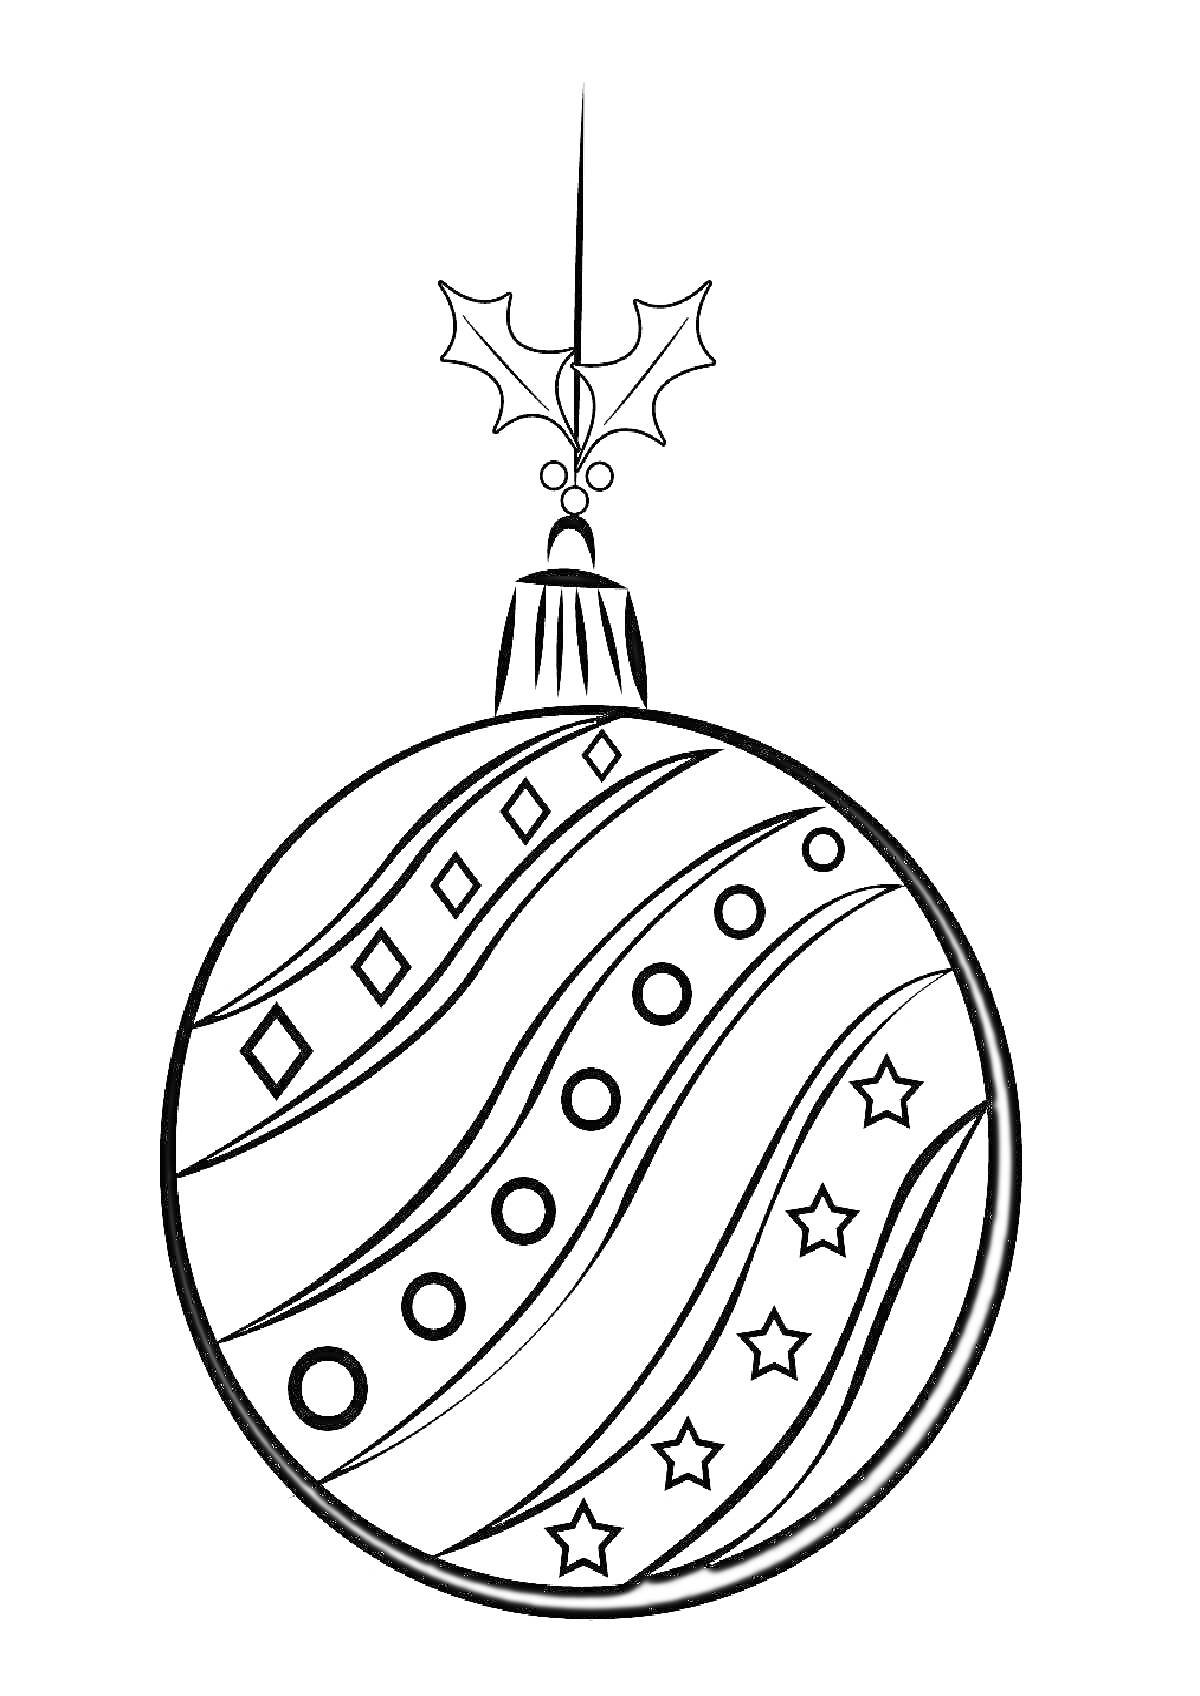 новогодний шар с узорами из ромбов, кругов и звезд, верхушка шарика с ветками остролиста